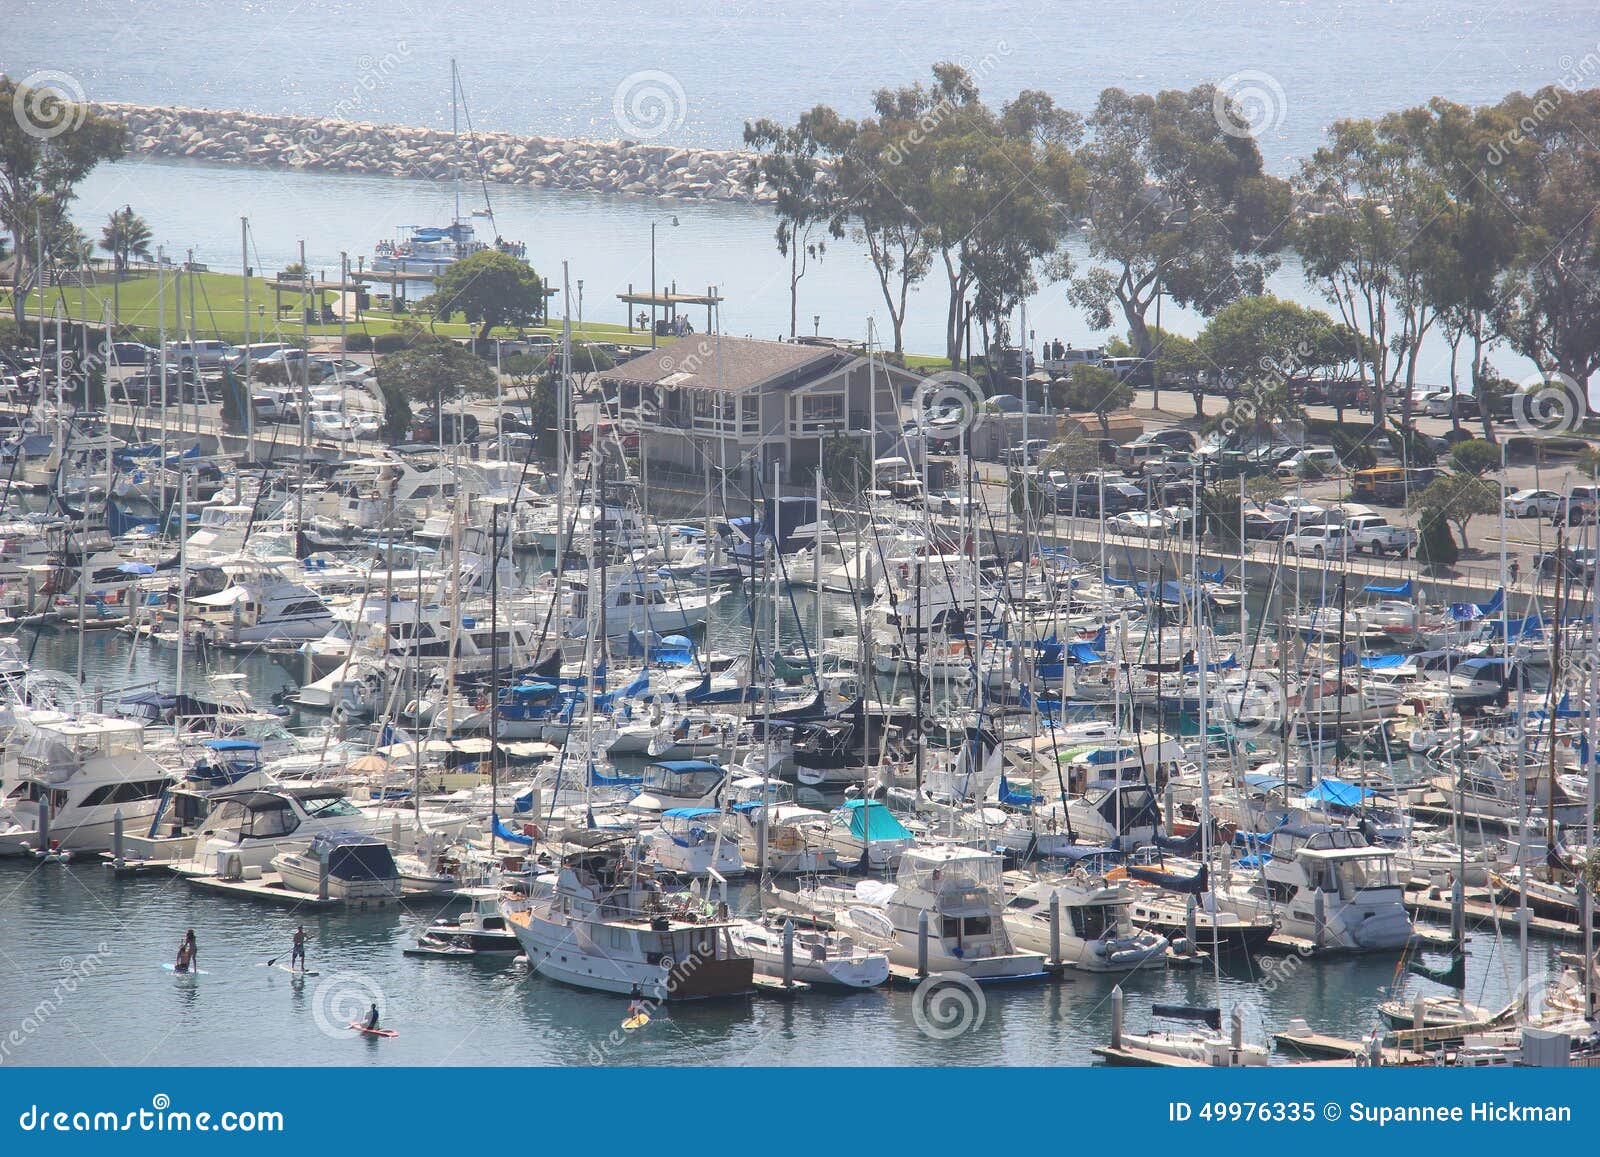 Dana Point Harbor stock image. Image of leisure, attractive - 49976335